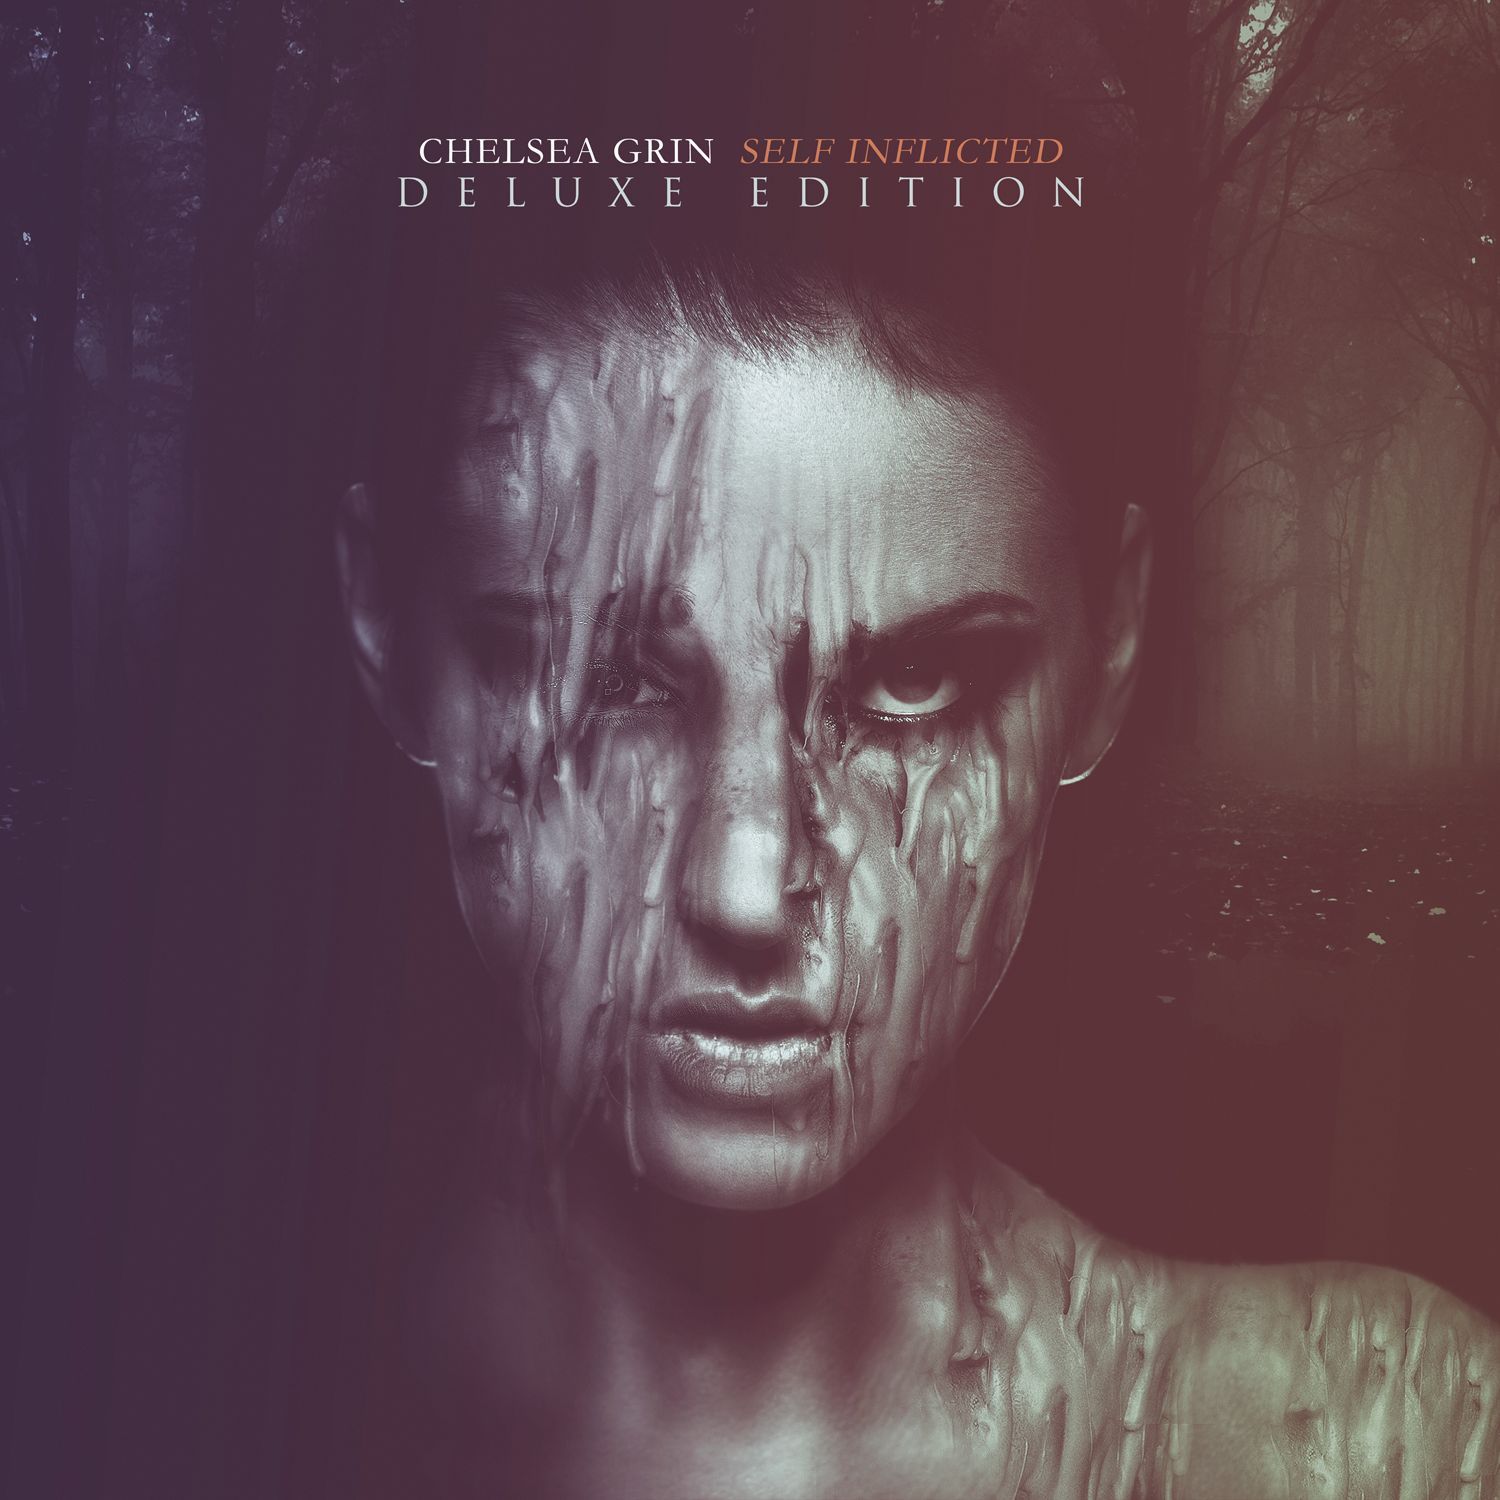 Imagem do álbum Self Inflicted (Deluxe Edition) do(a) artista Chelsea Grin